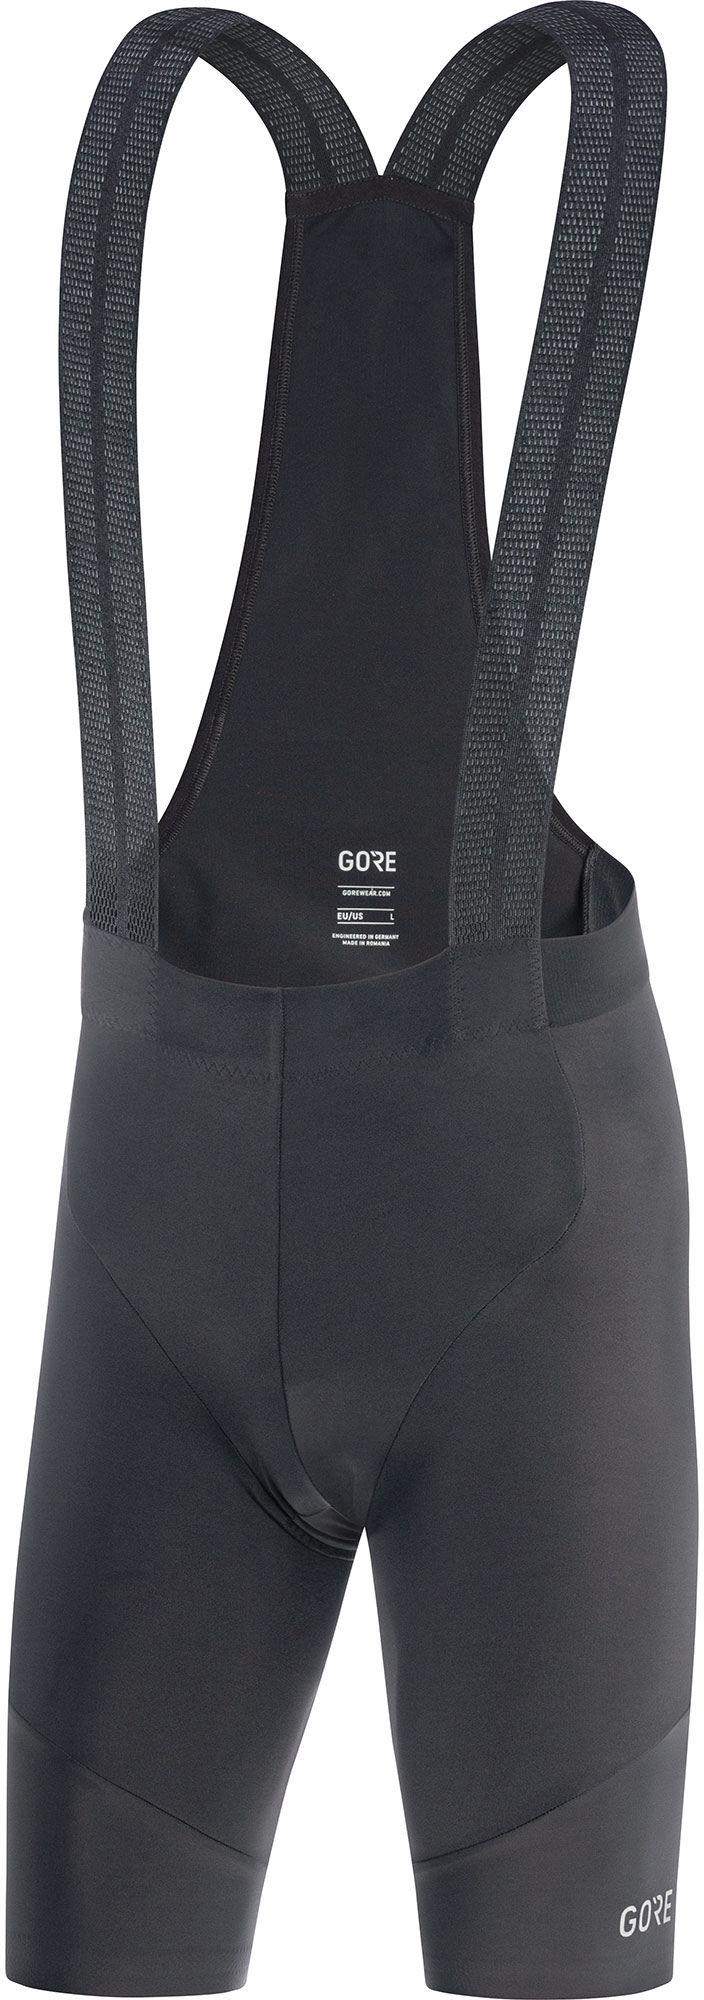 Gorewear Ardent Bib Shorts Plus - Black